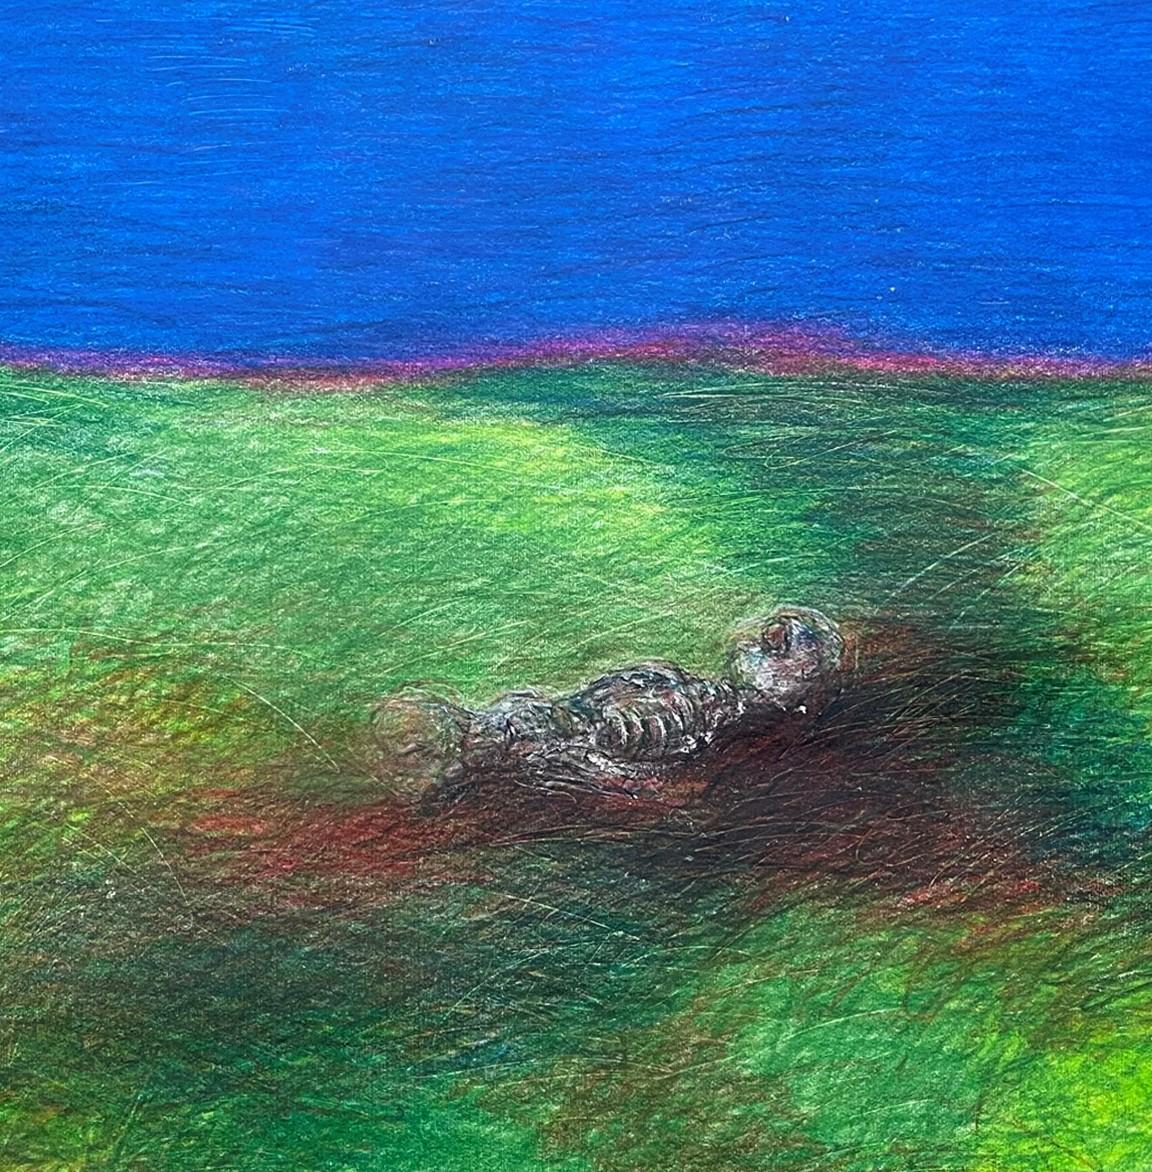 Untitled_Body on the Field #1 - 21st Century, Green, Blue, Sky, Contemporary - Art by Zsolt Berszán